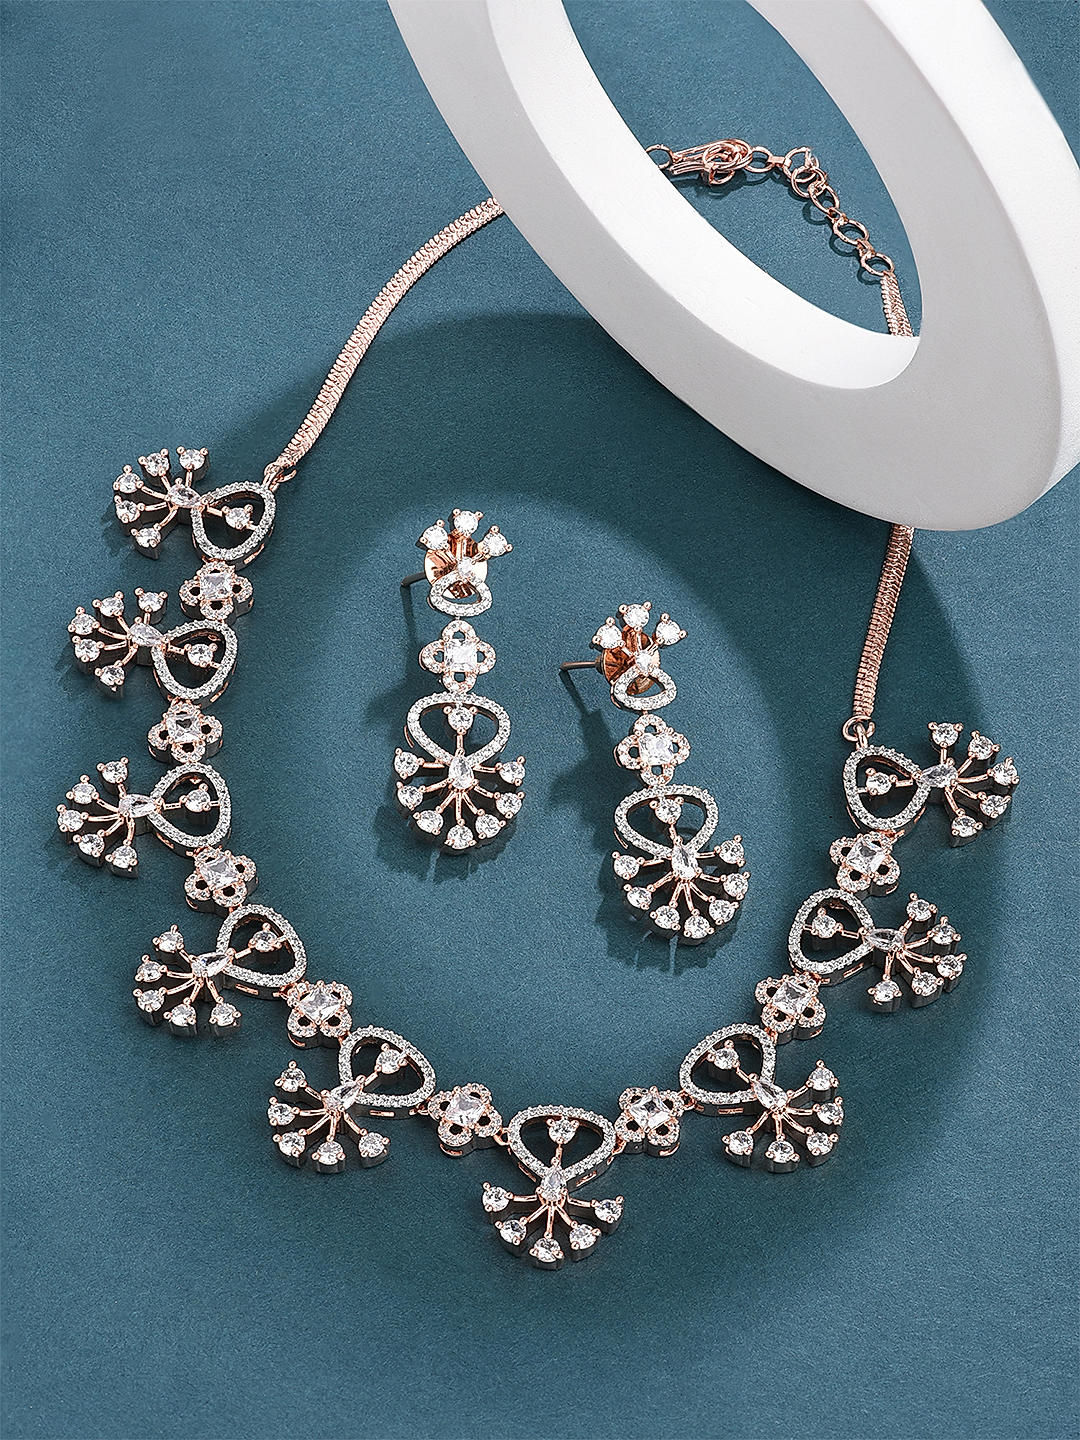 8.0-8.5mm Pink Freshwater Pearl Necklace, Bracelet & Earrings - Pure Pearls